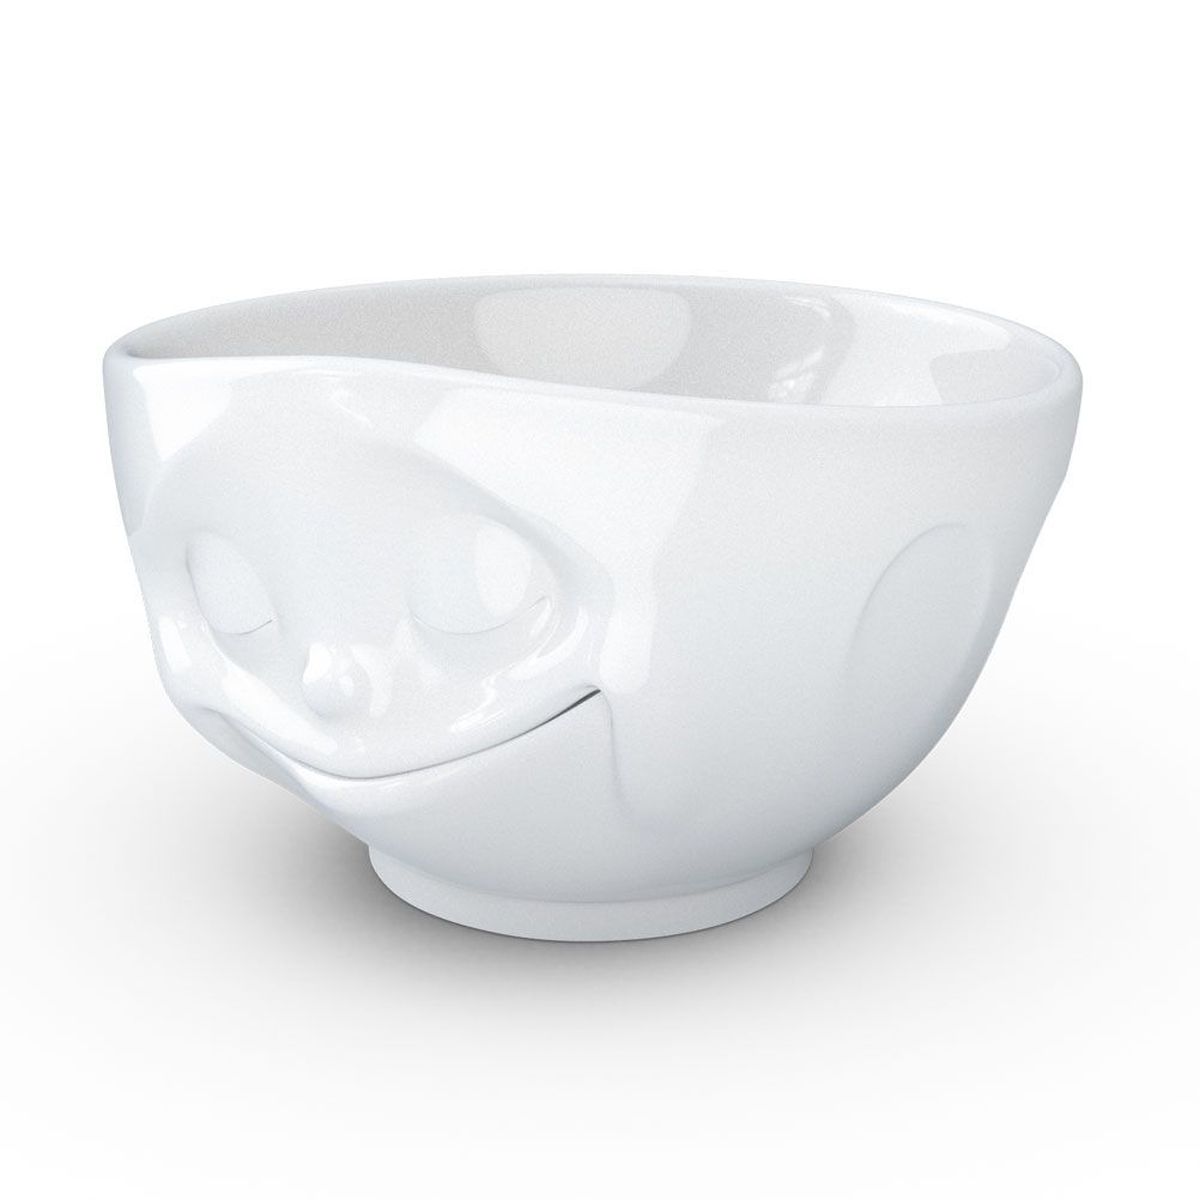 XL Mood Porcelain Bowl by Tassen 1000 ml - Happy